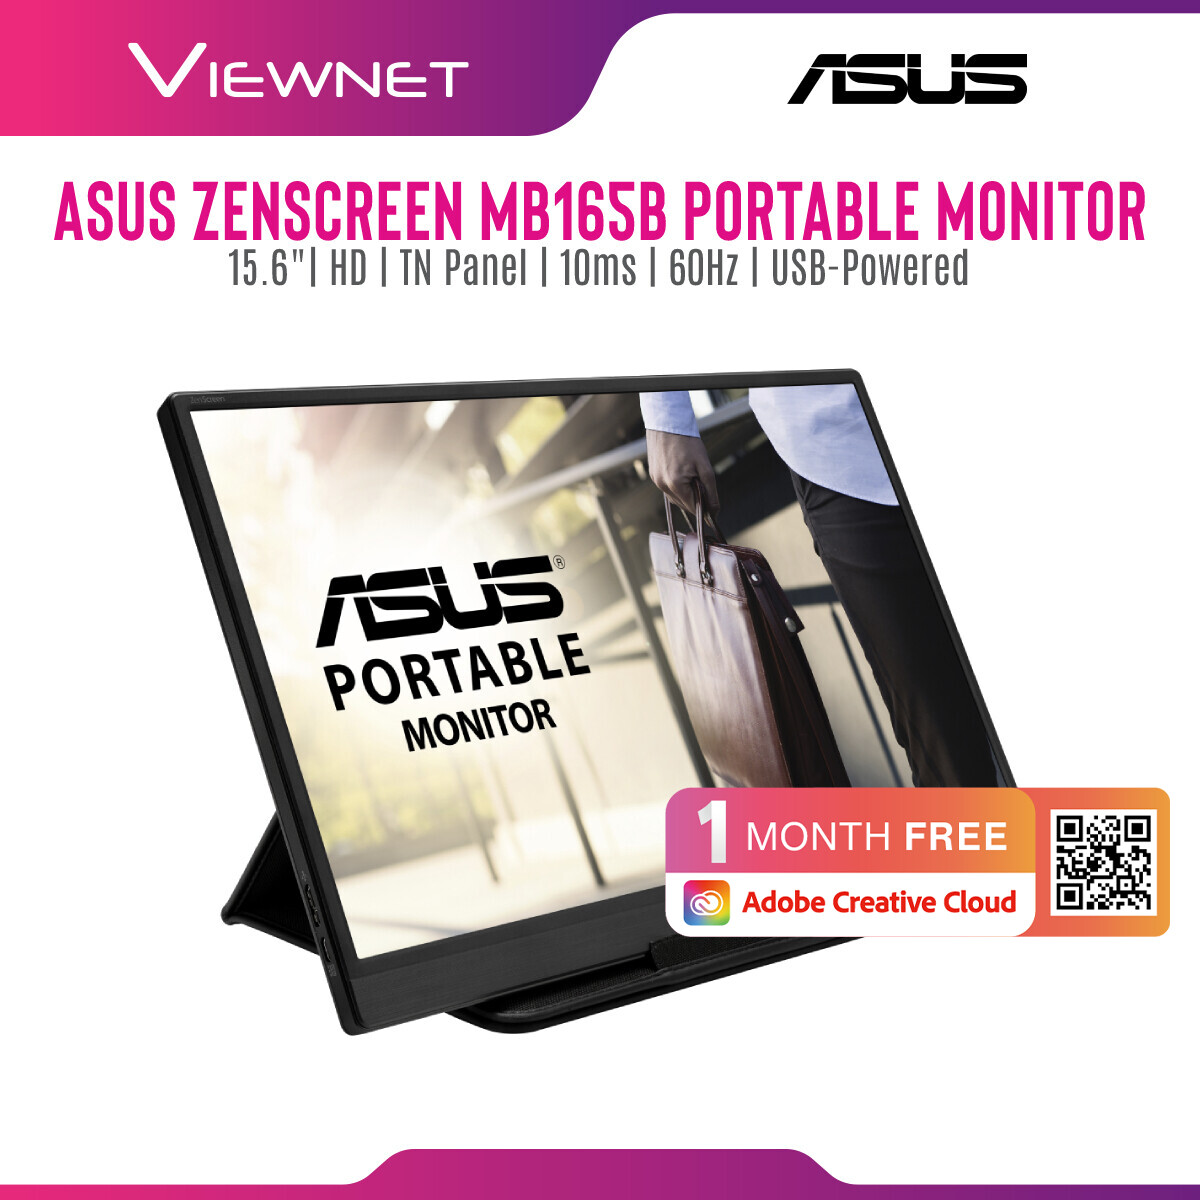 ASUS ZenScreen MB165B Portable USB Monitor- 15.6 inch, HD(1366x768), Narrow Bezel, USB-powered, Anti-glare surface